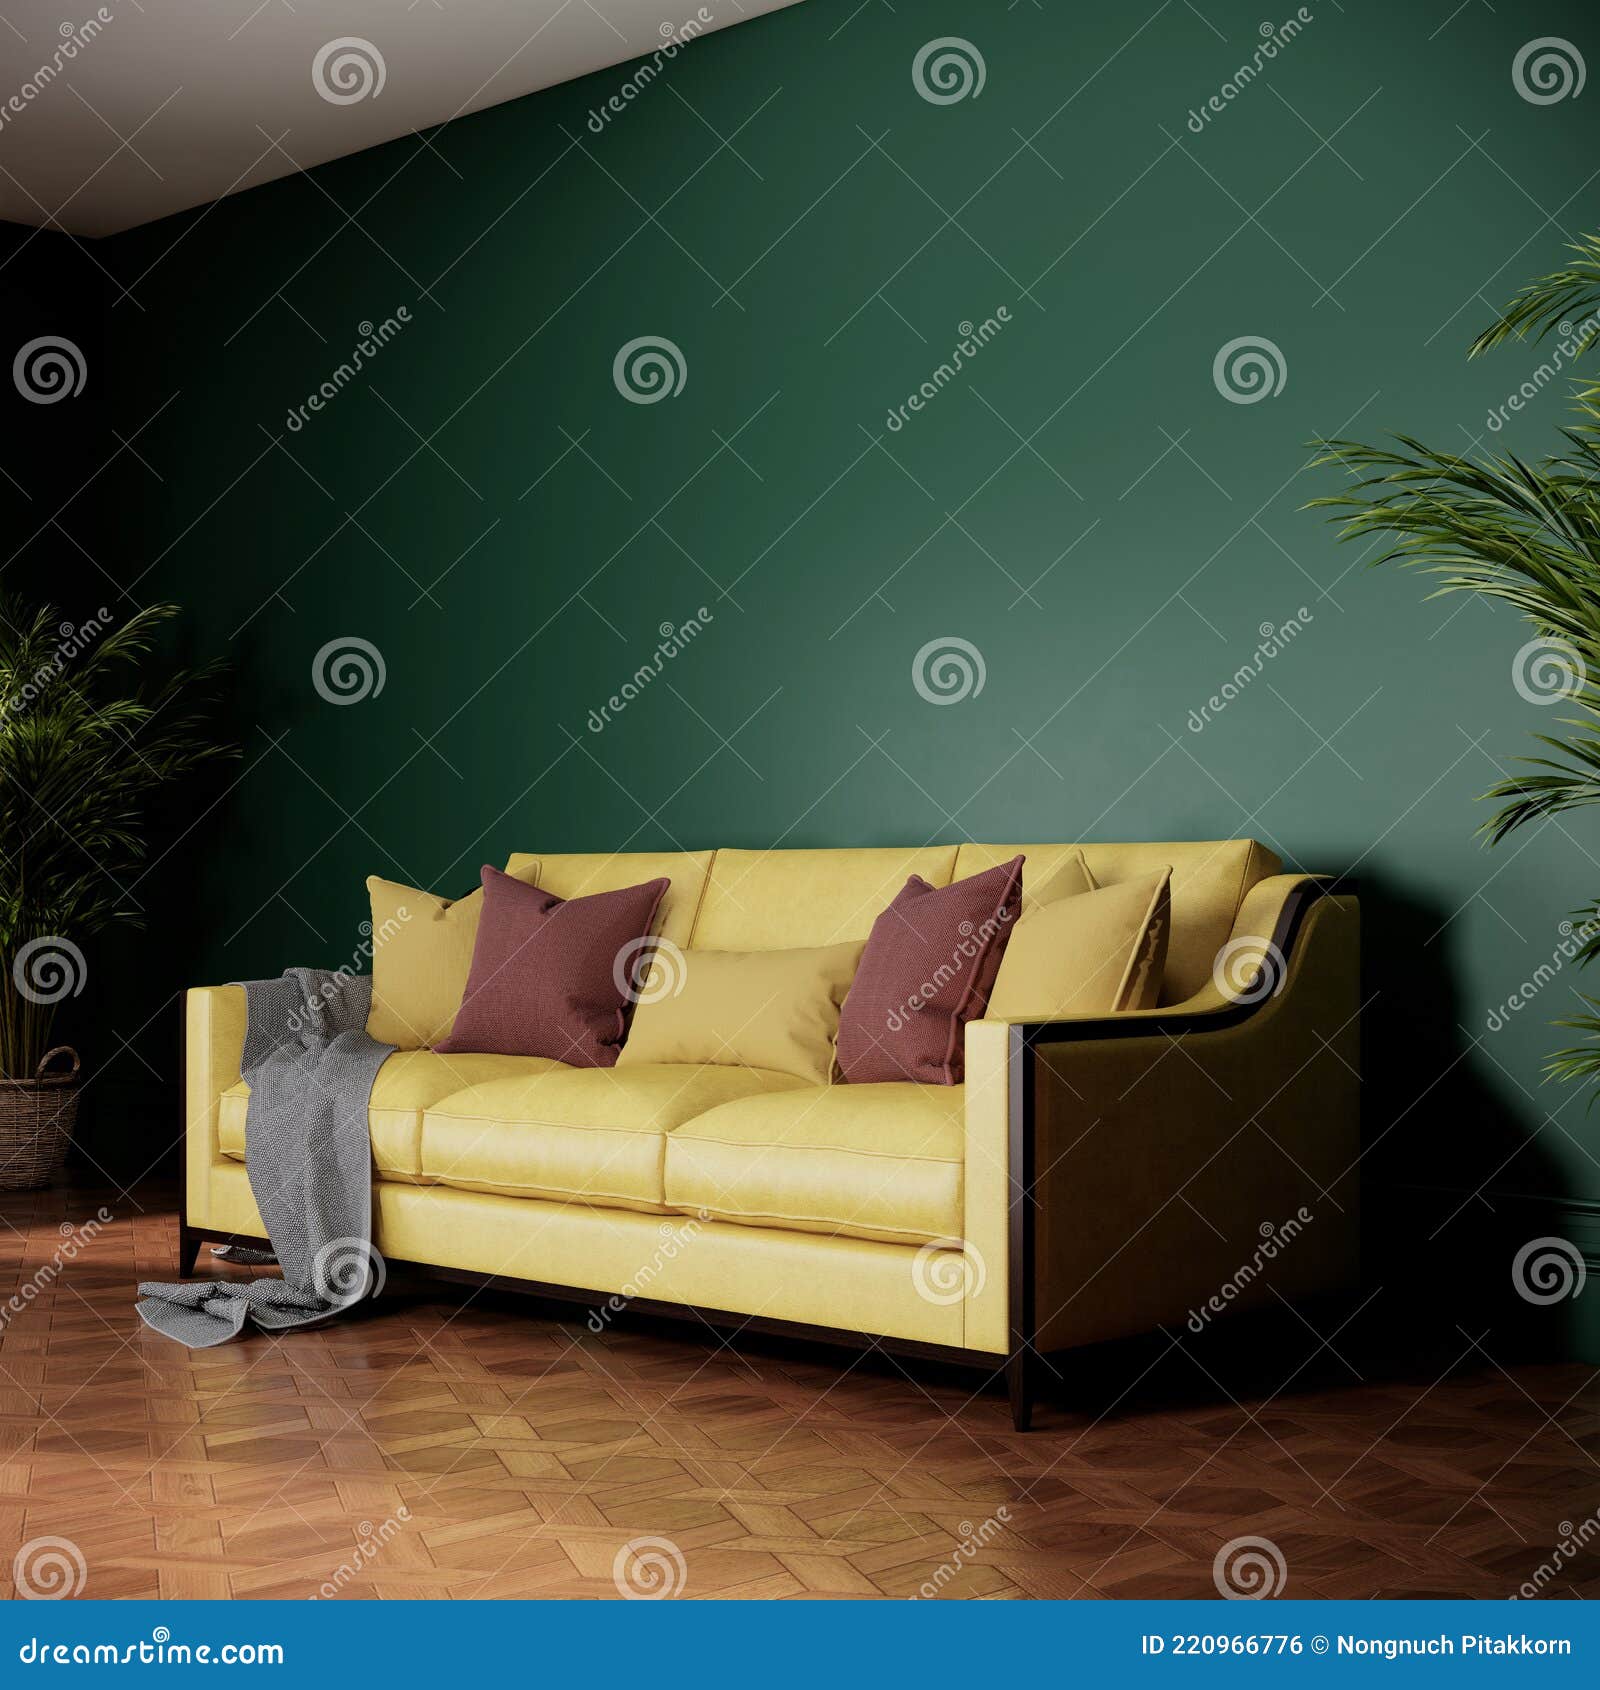 Yellow Sofa in Green Color Room. Interior Design Stock Illustration -  Illustration of backgrounds, elegance: 220966776